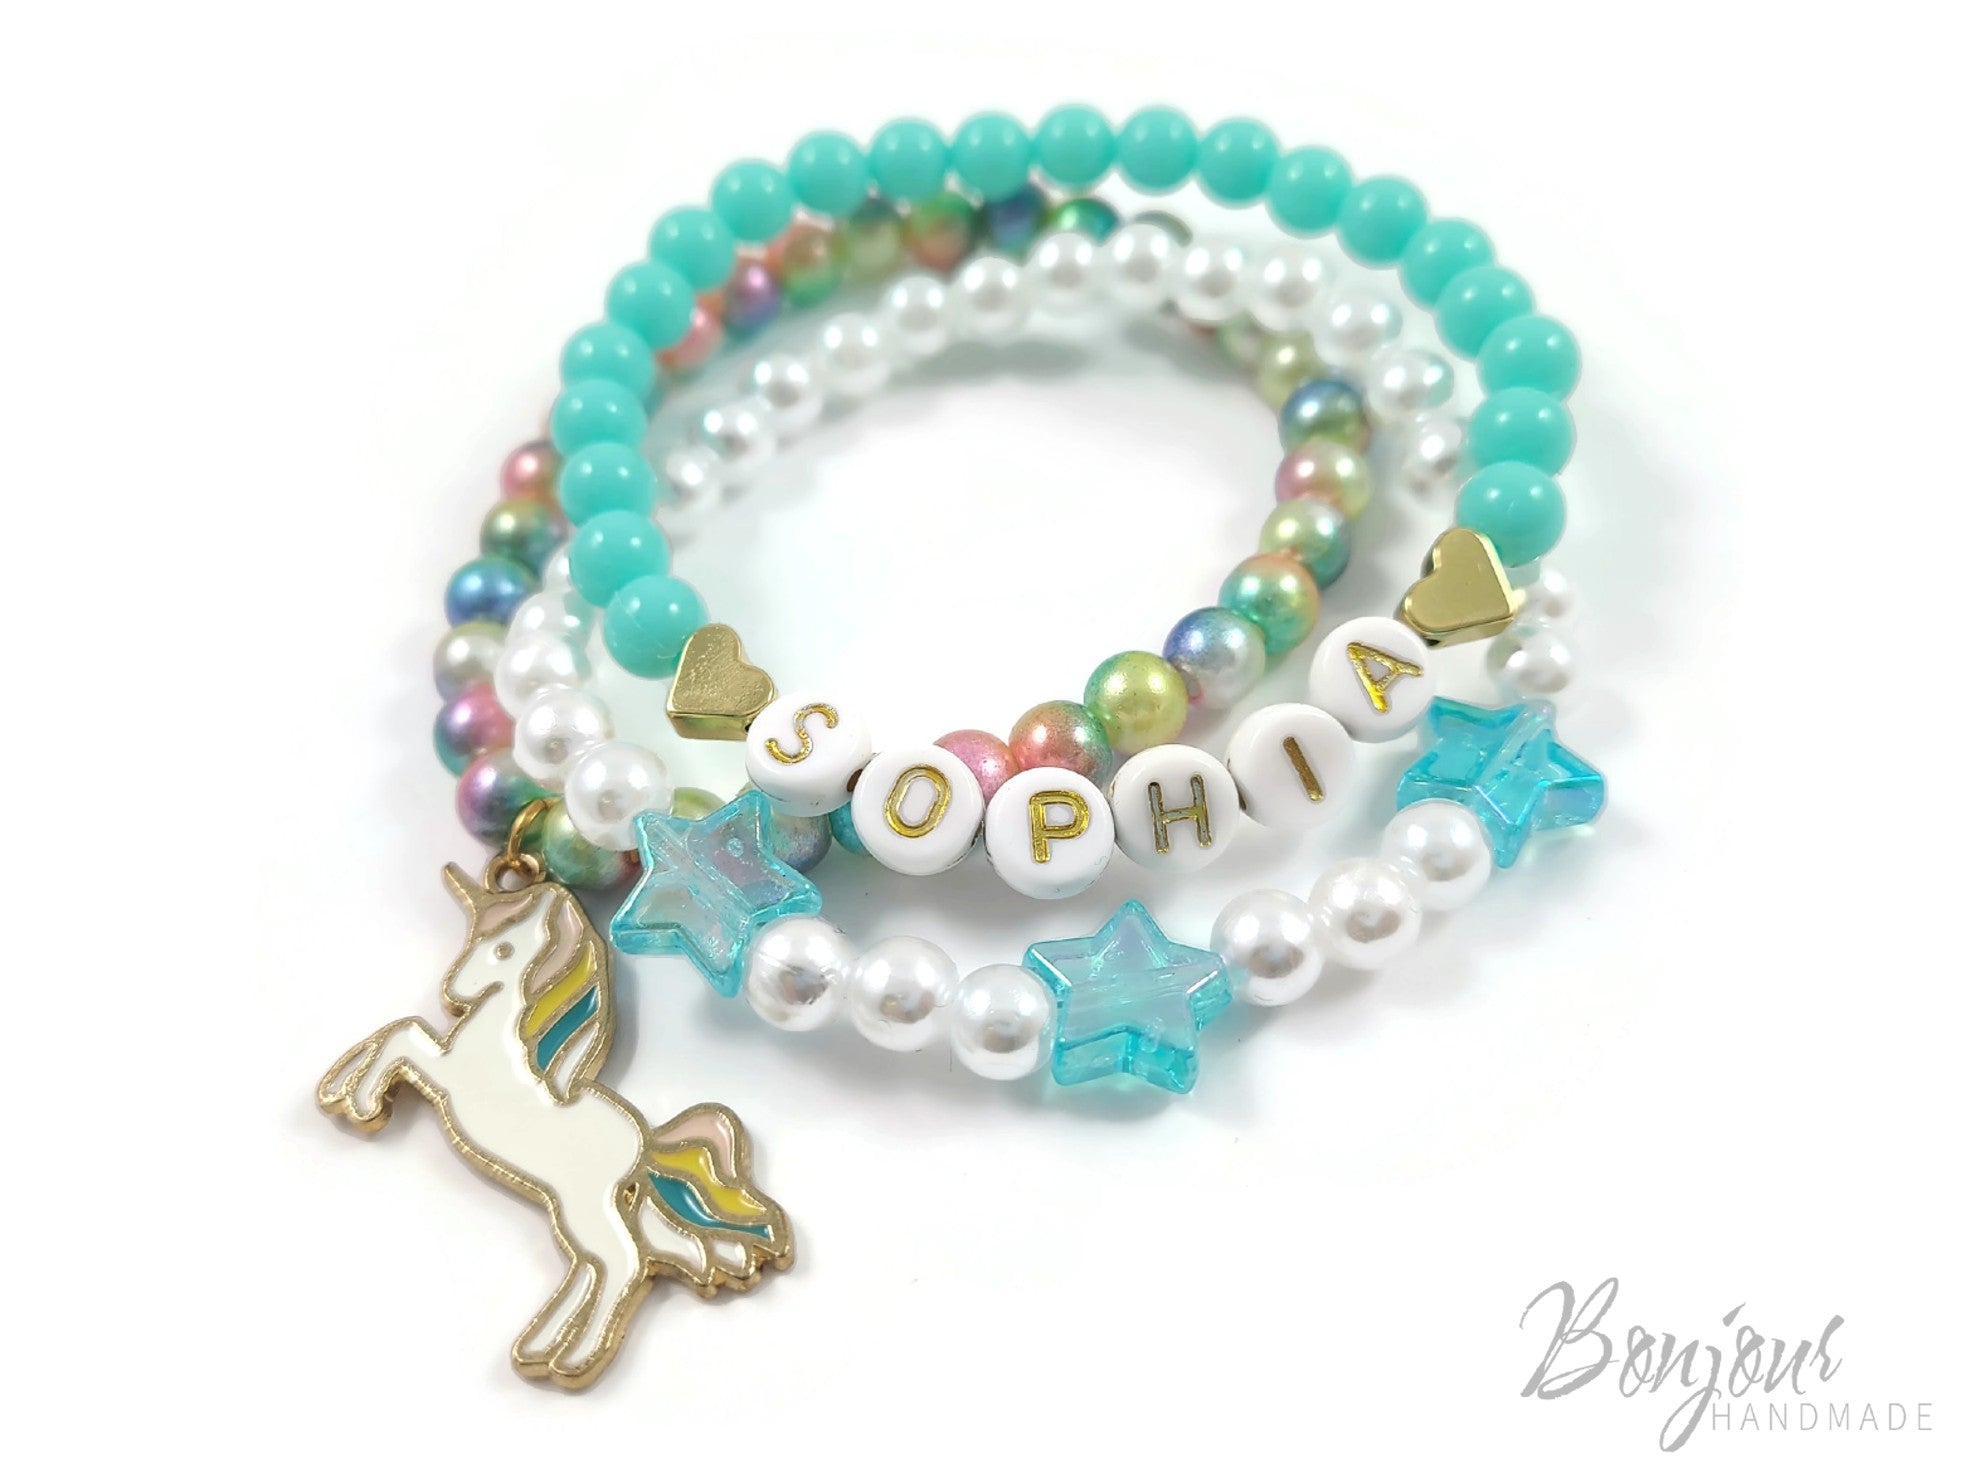 How to make stretch bracelets - The personalized unicorn set